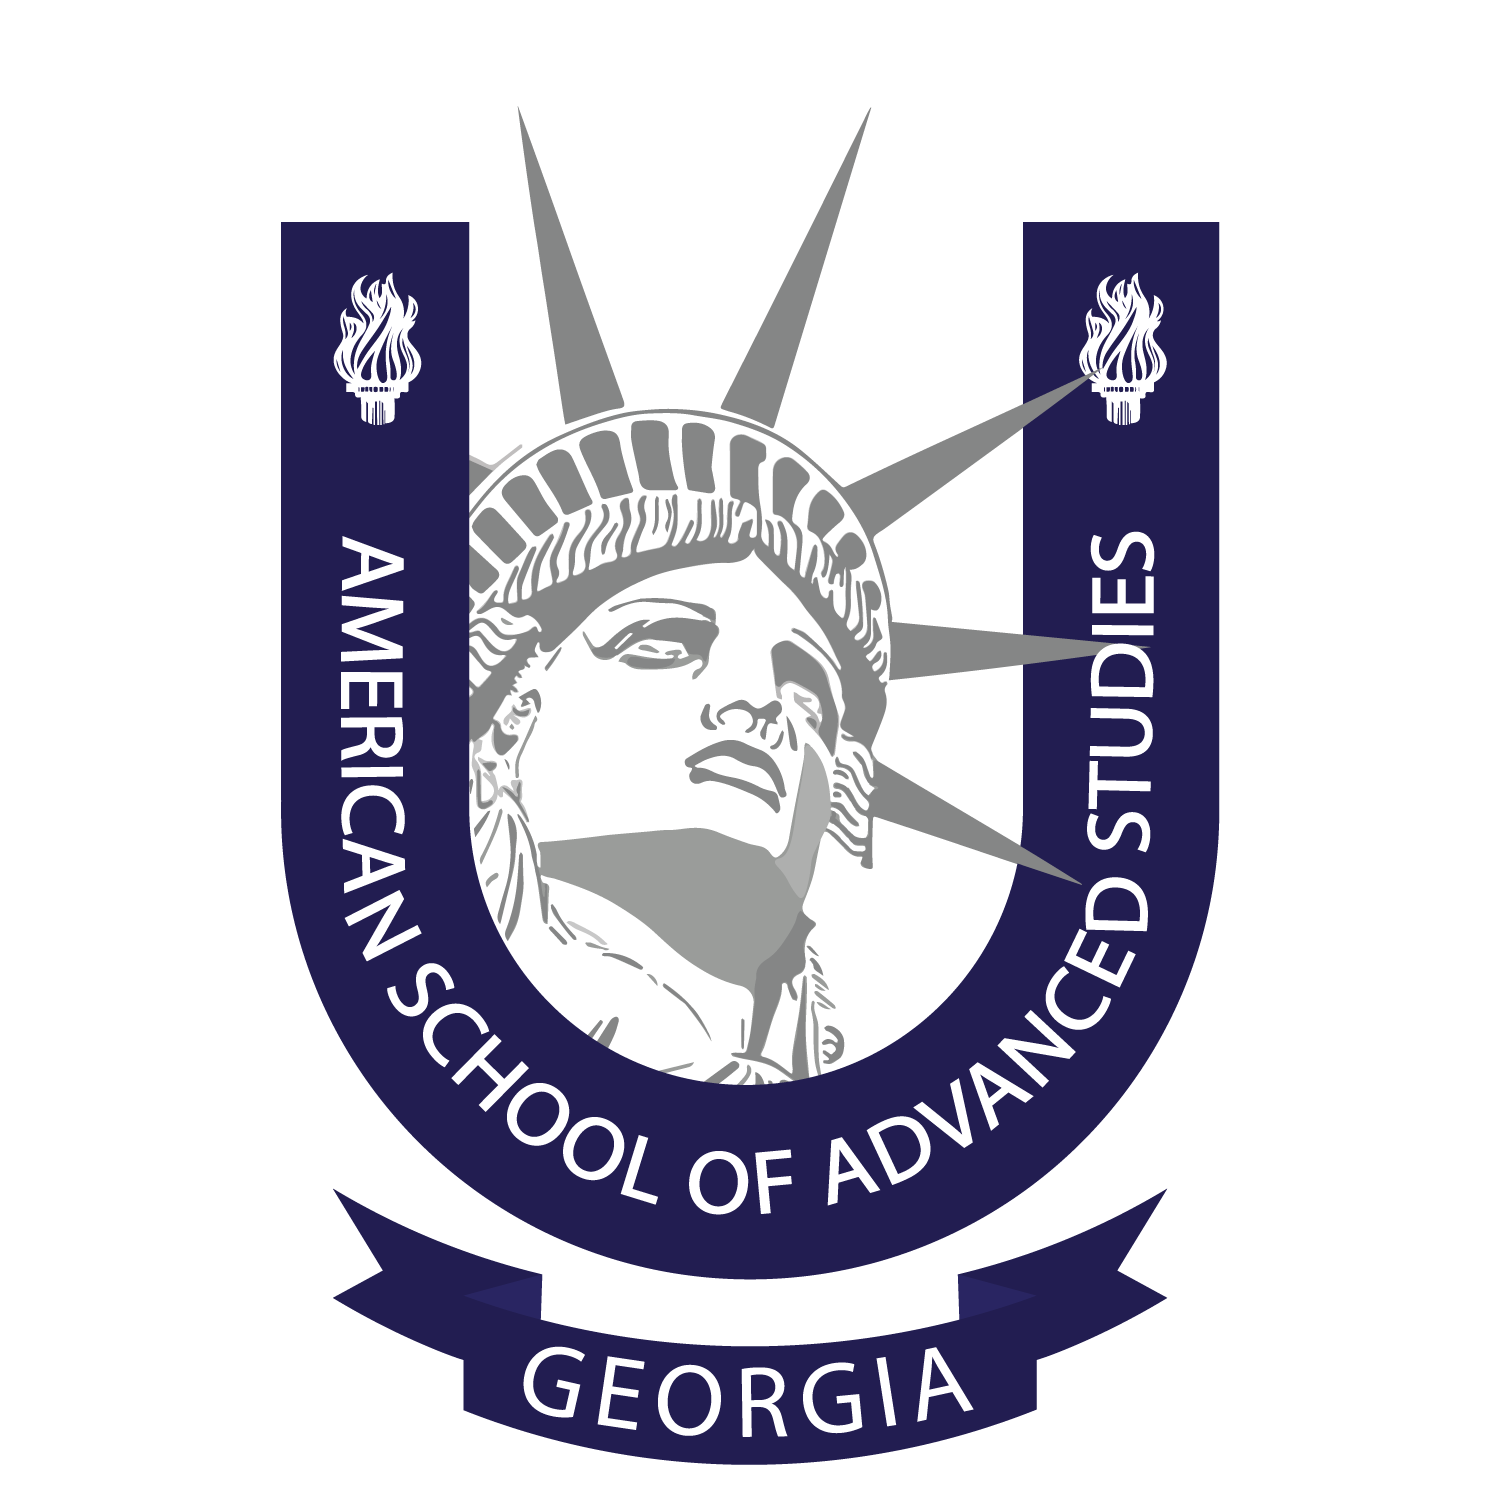 American School of Advanced Studies